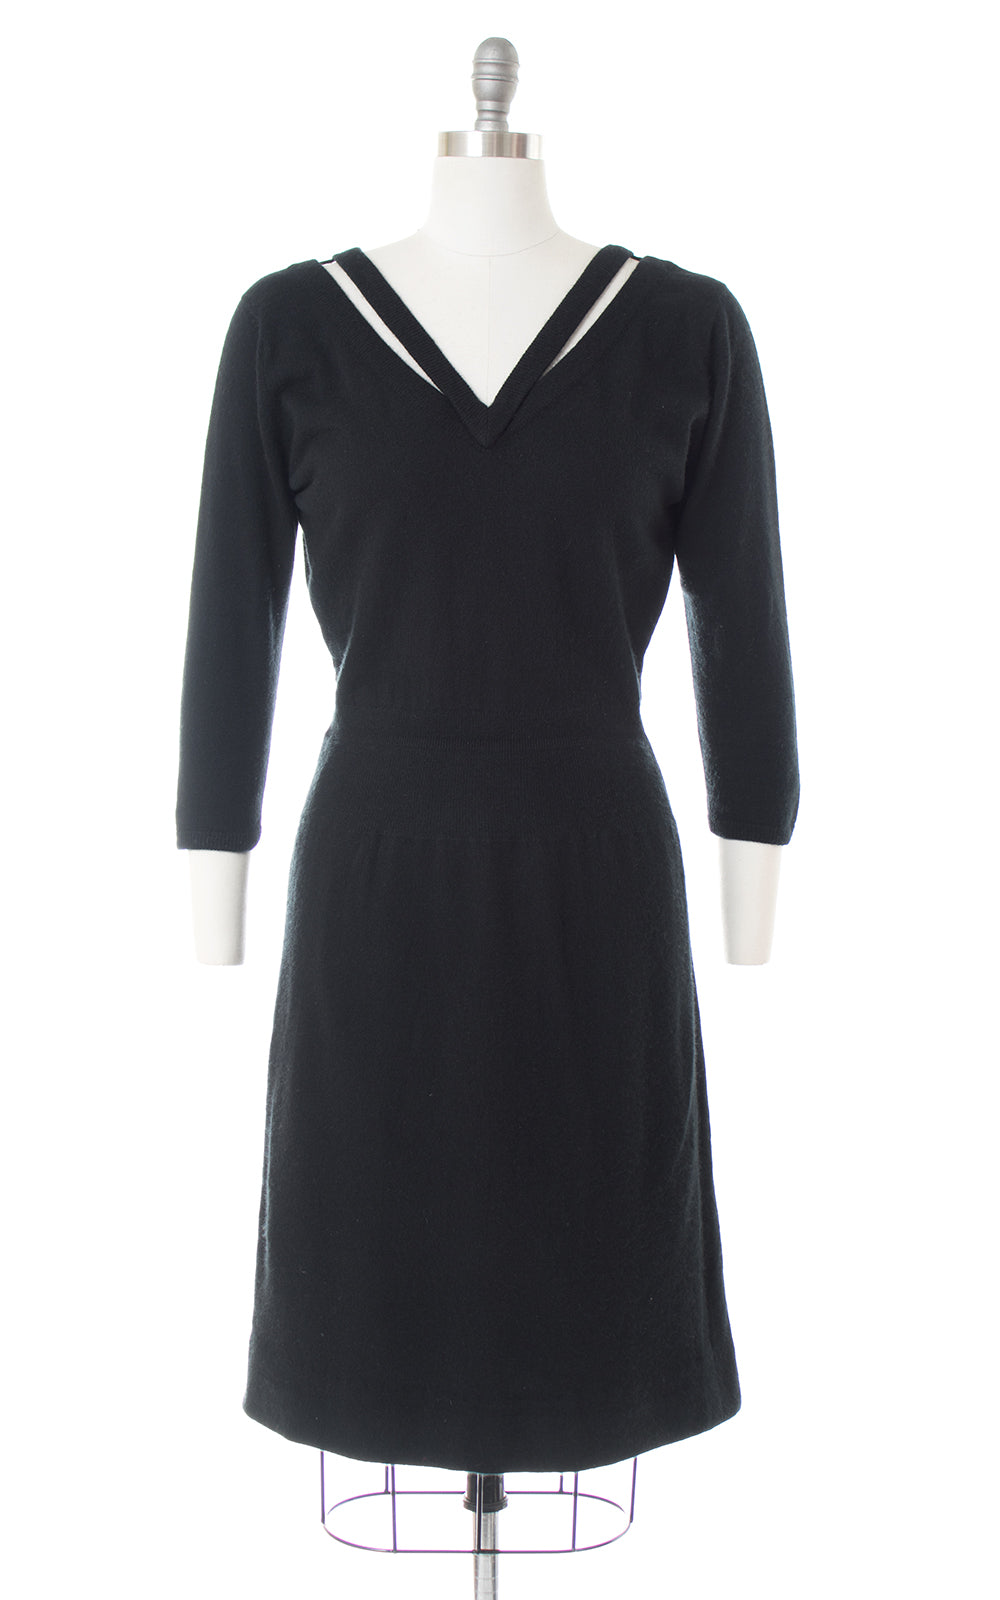 1950s Black Cashmere Knit Sweater Dress